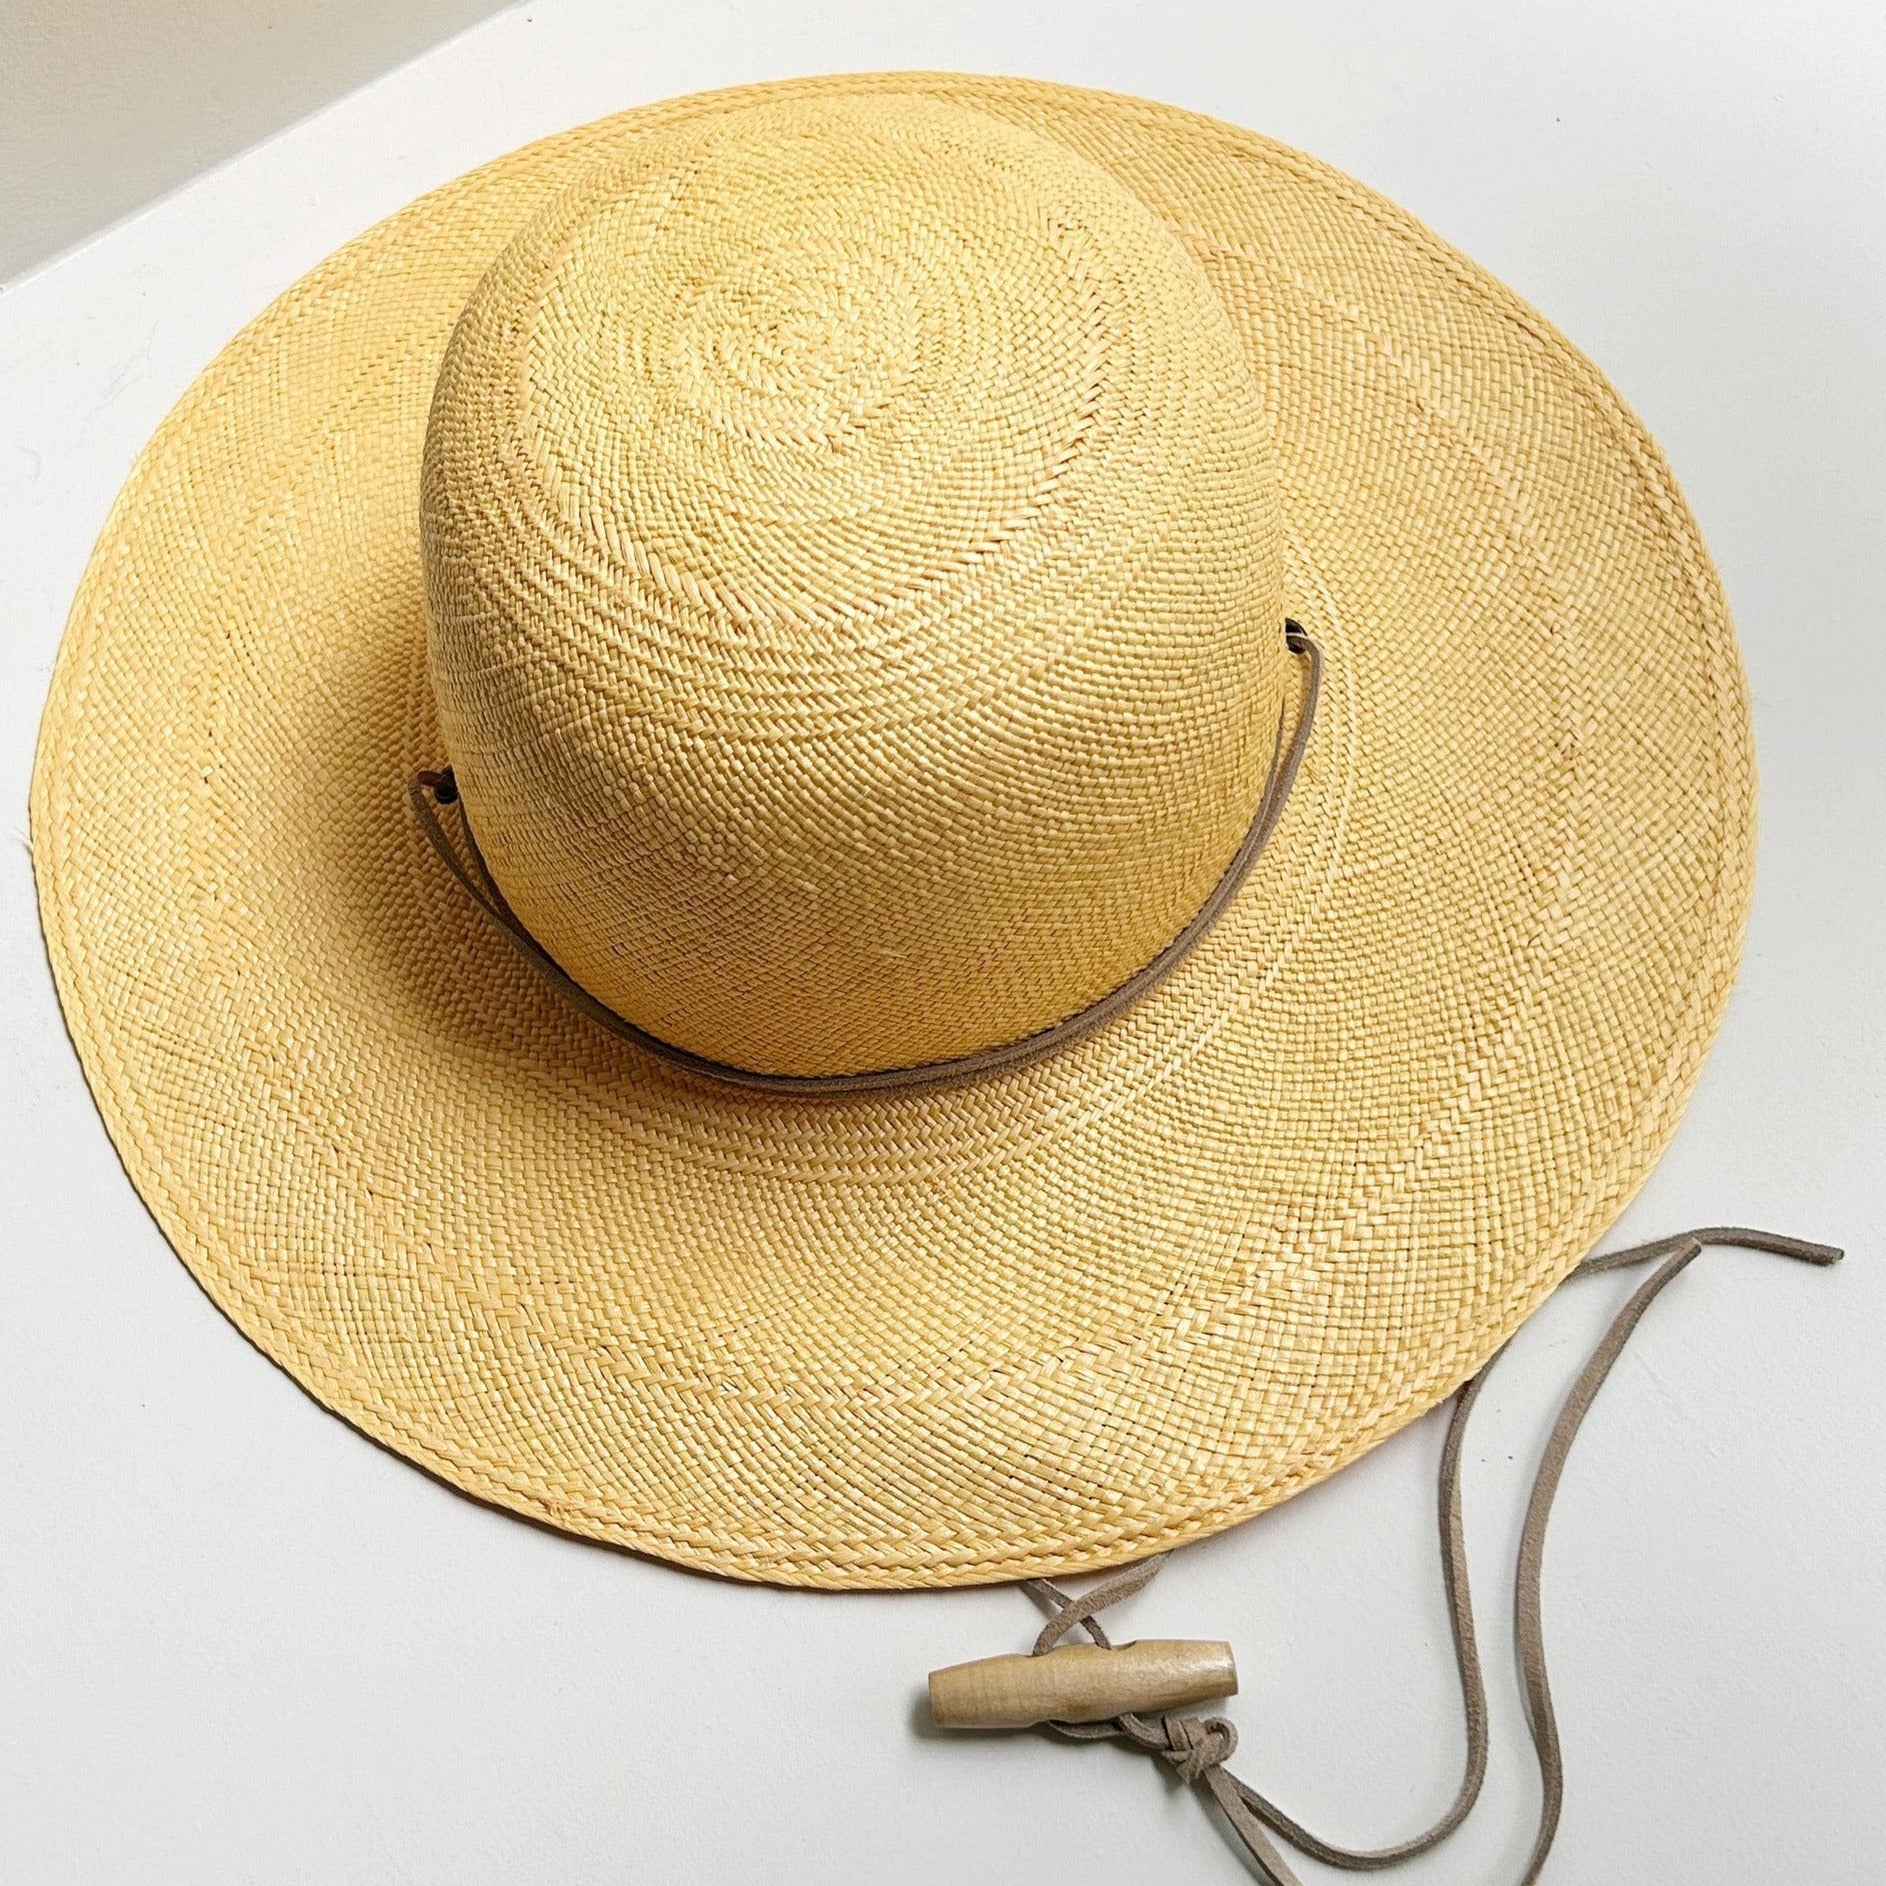 Suncrest Sun Hat in Panama Straw Accessories Brookes Boswell Daffodil S 